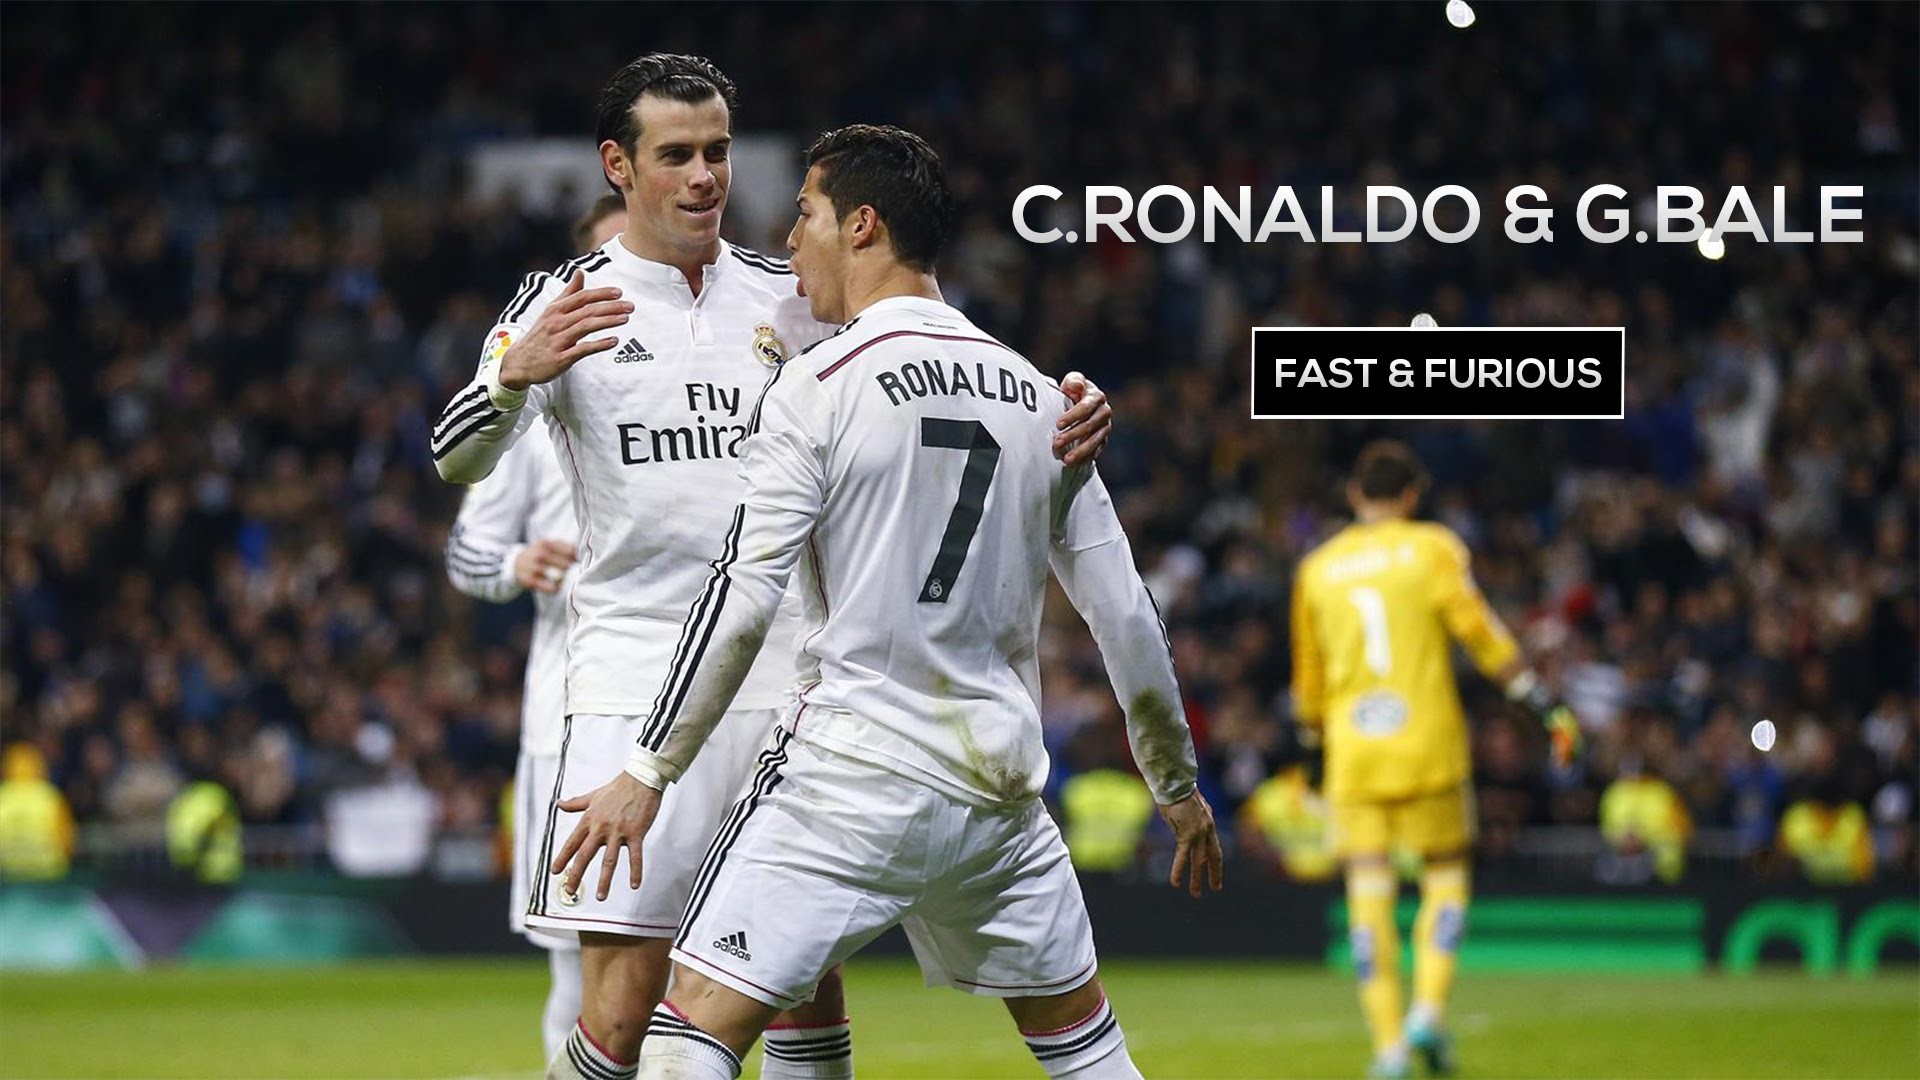 1920x1080 Fast Furious Gareth Bale With Cristiano Ronaldo Image. Wallpaper ...